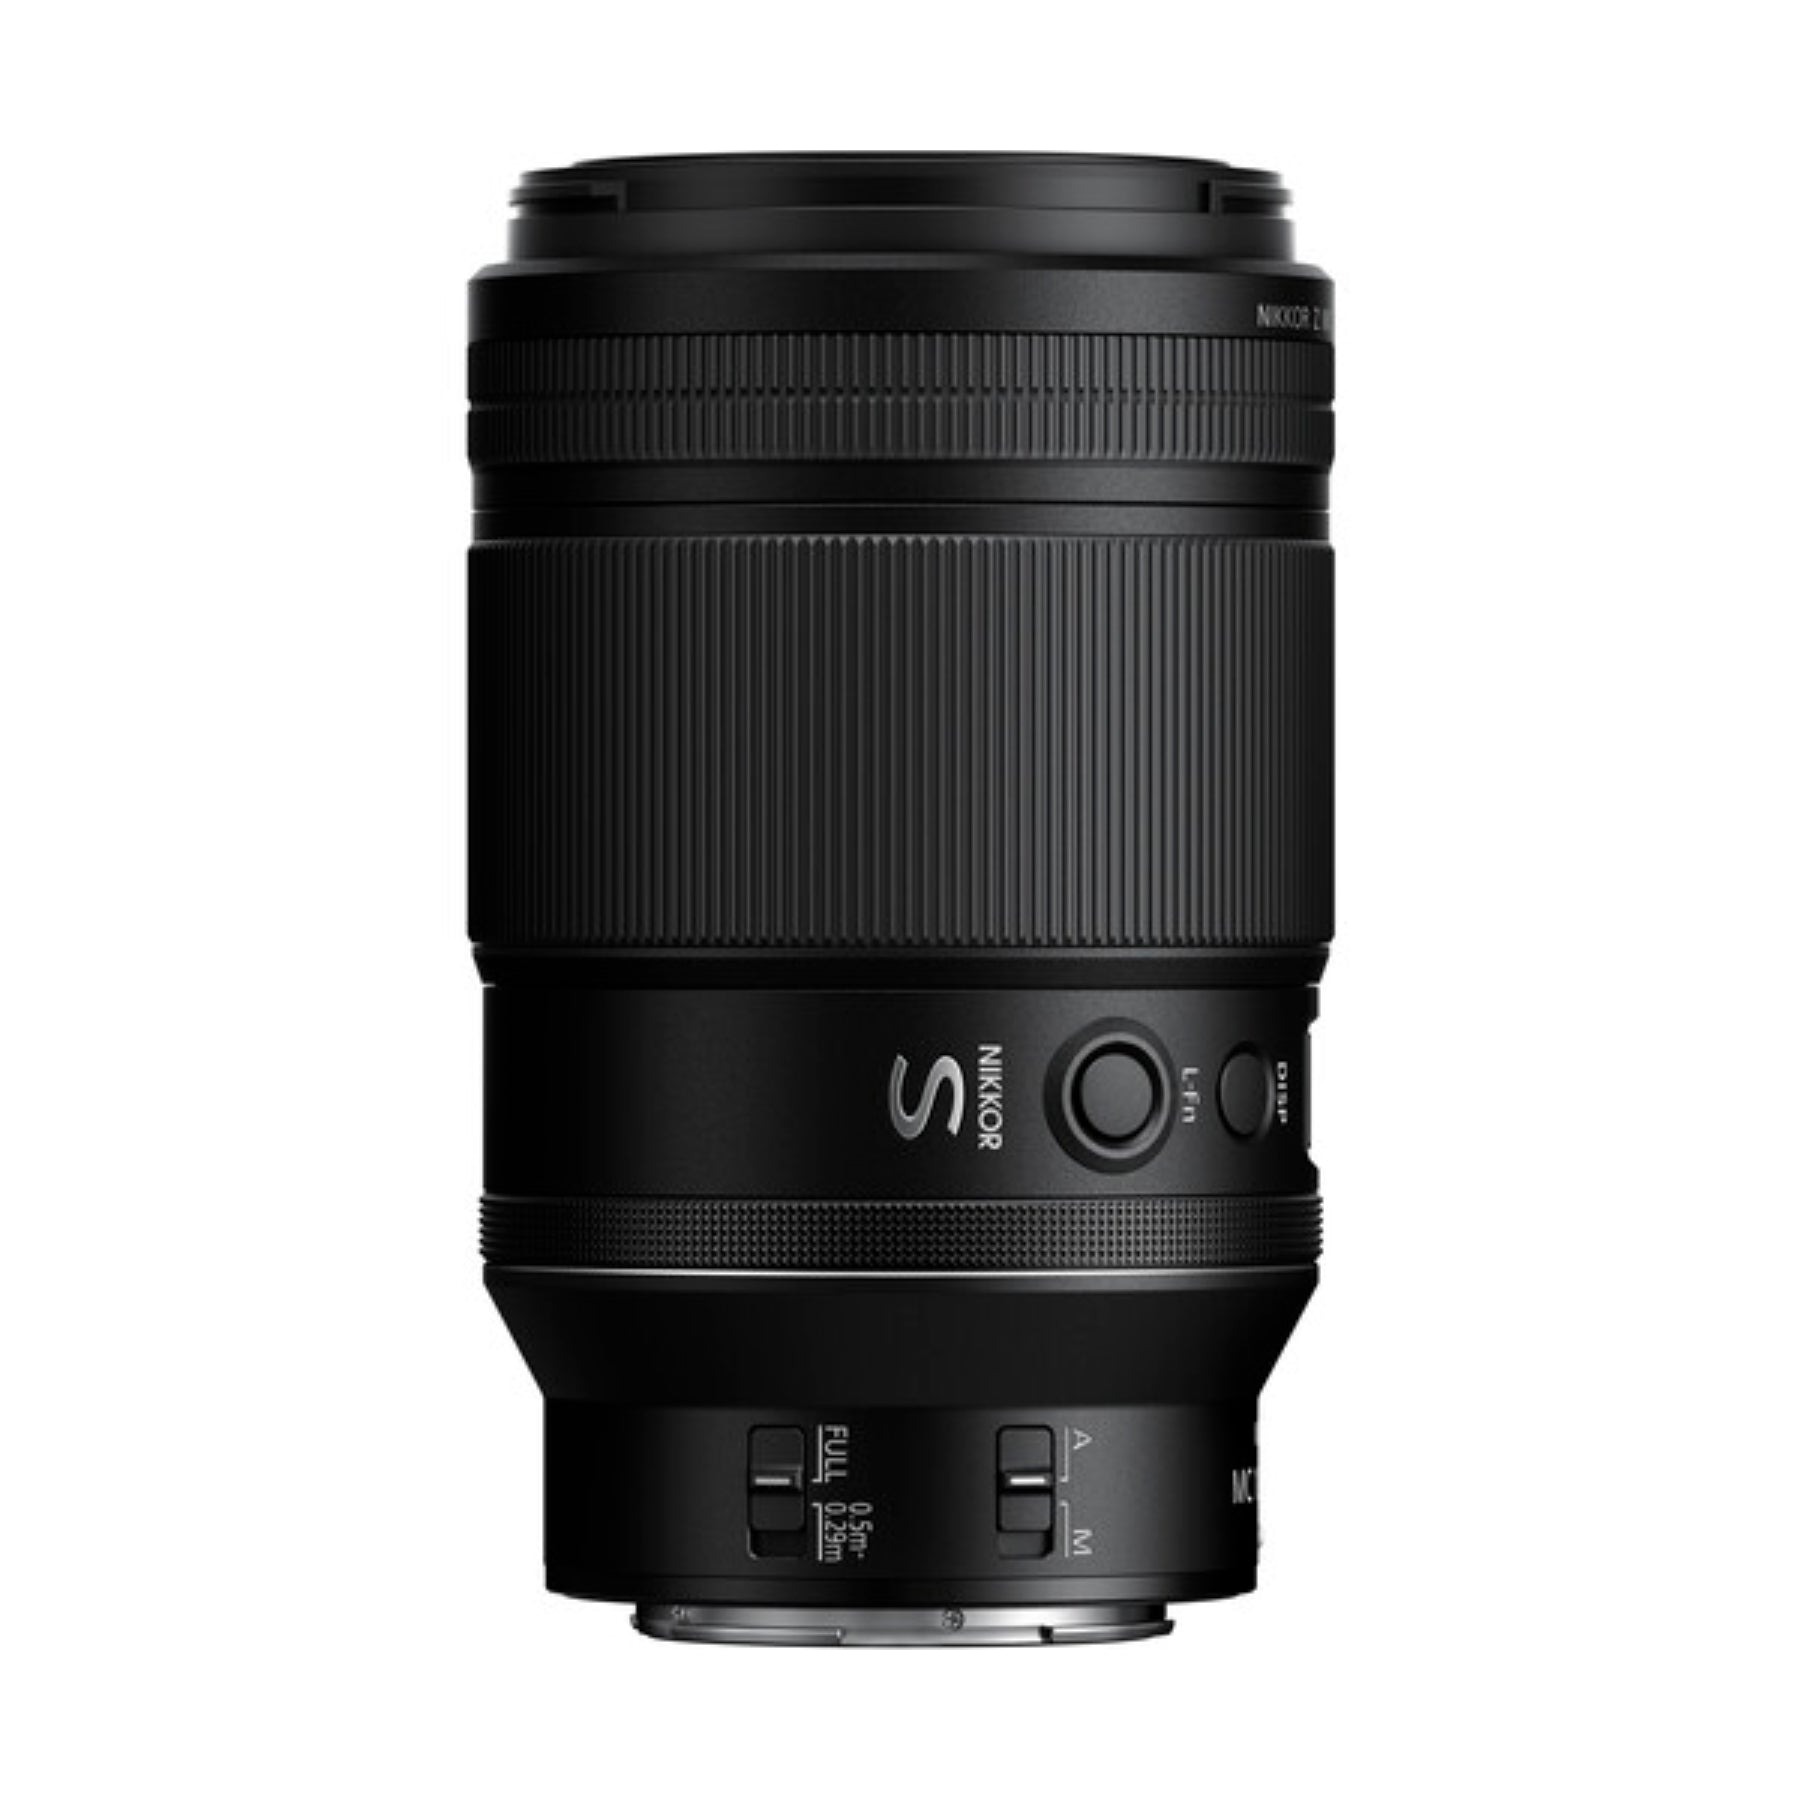 Buy Nikon NIKKOR Z MC 105mm f/2.8 VR S Macro Lens at Topic Store